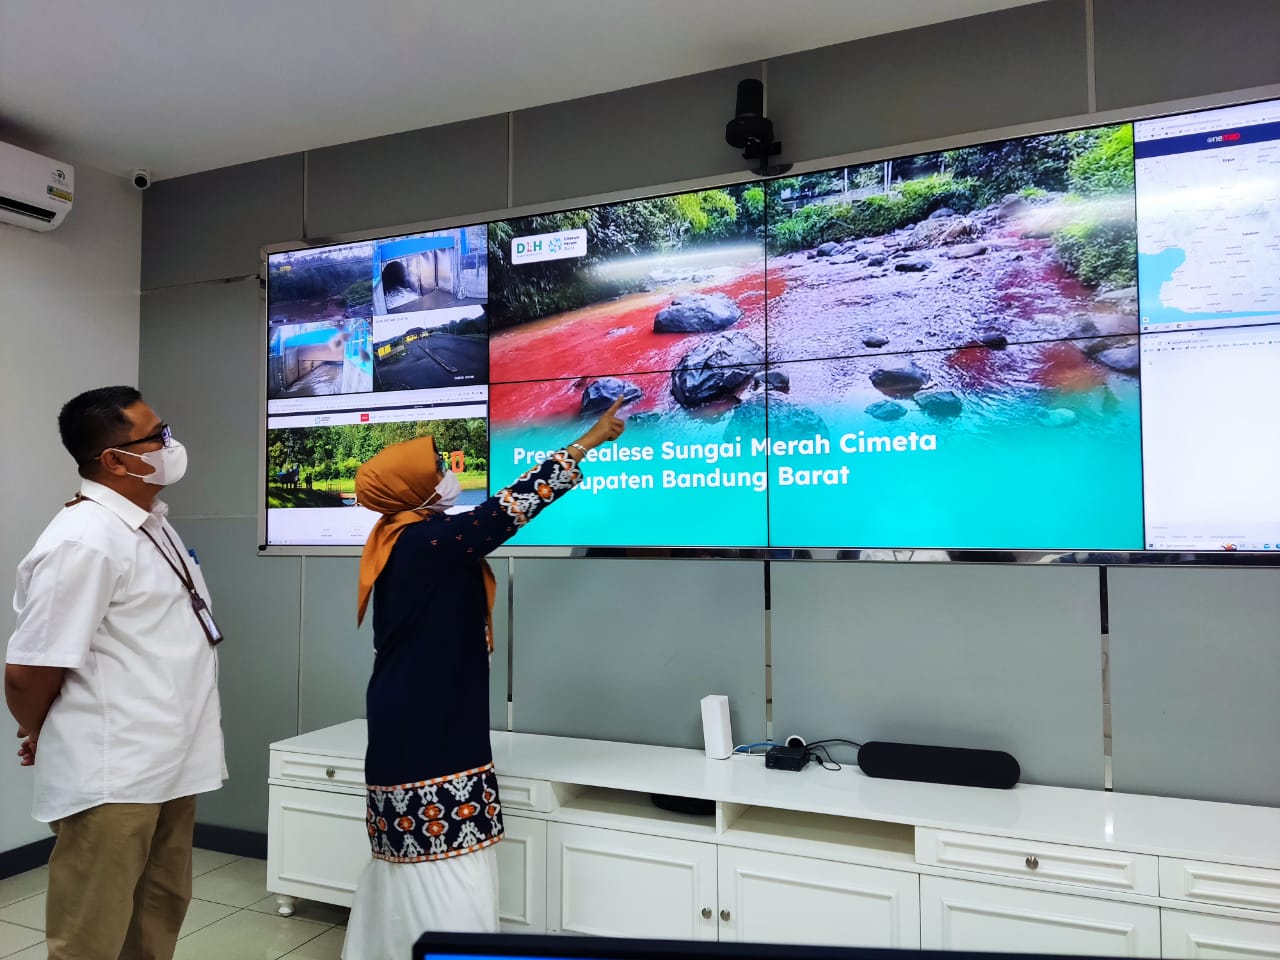 DLH Jawa Barat Pastikan Cemaran Merah Sungai Cimeta Tak Berbahaya